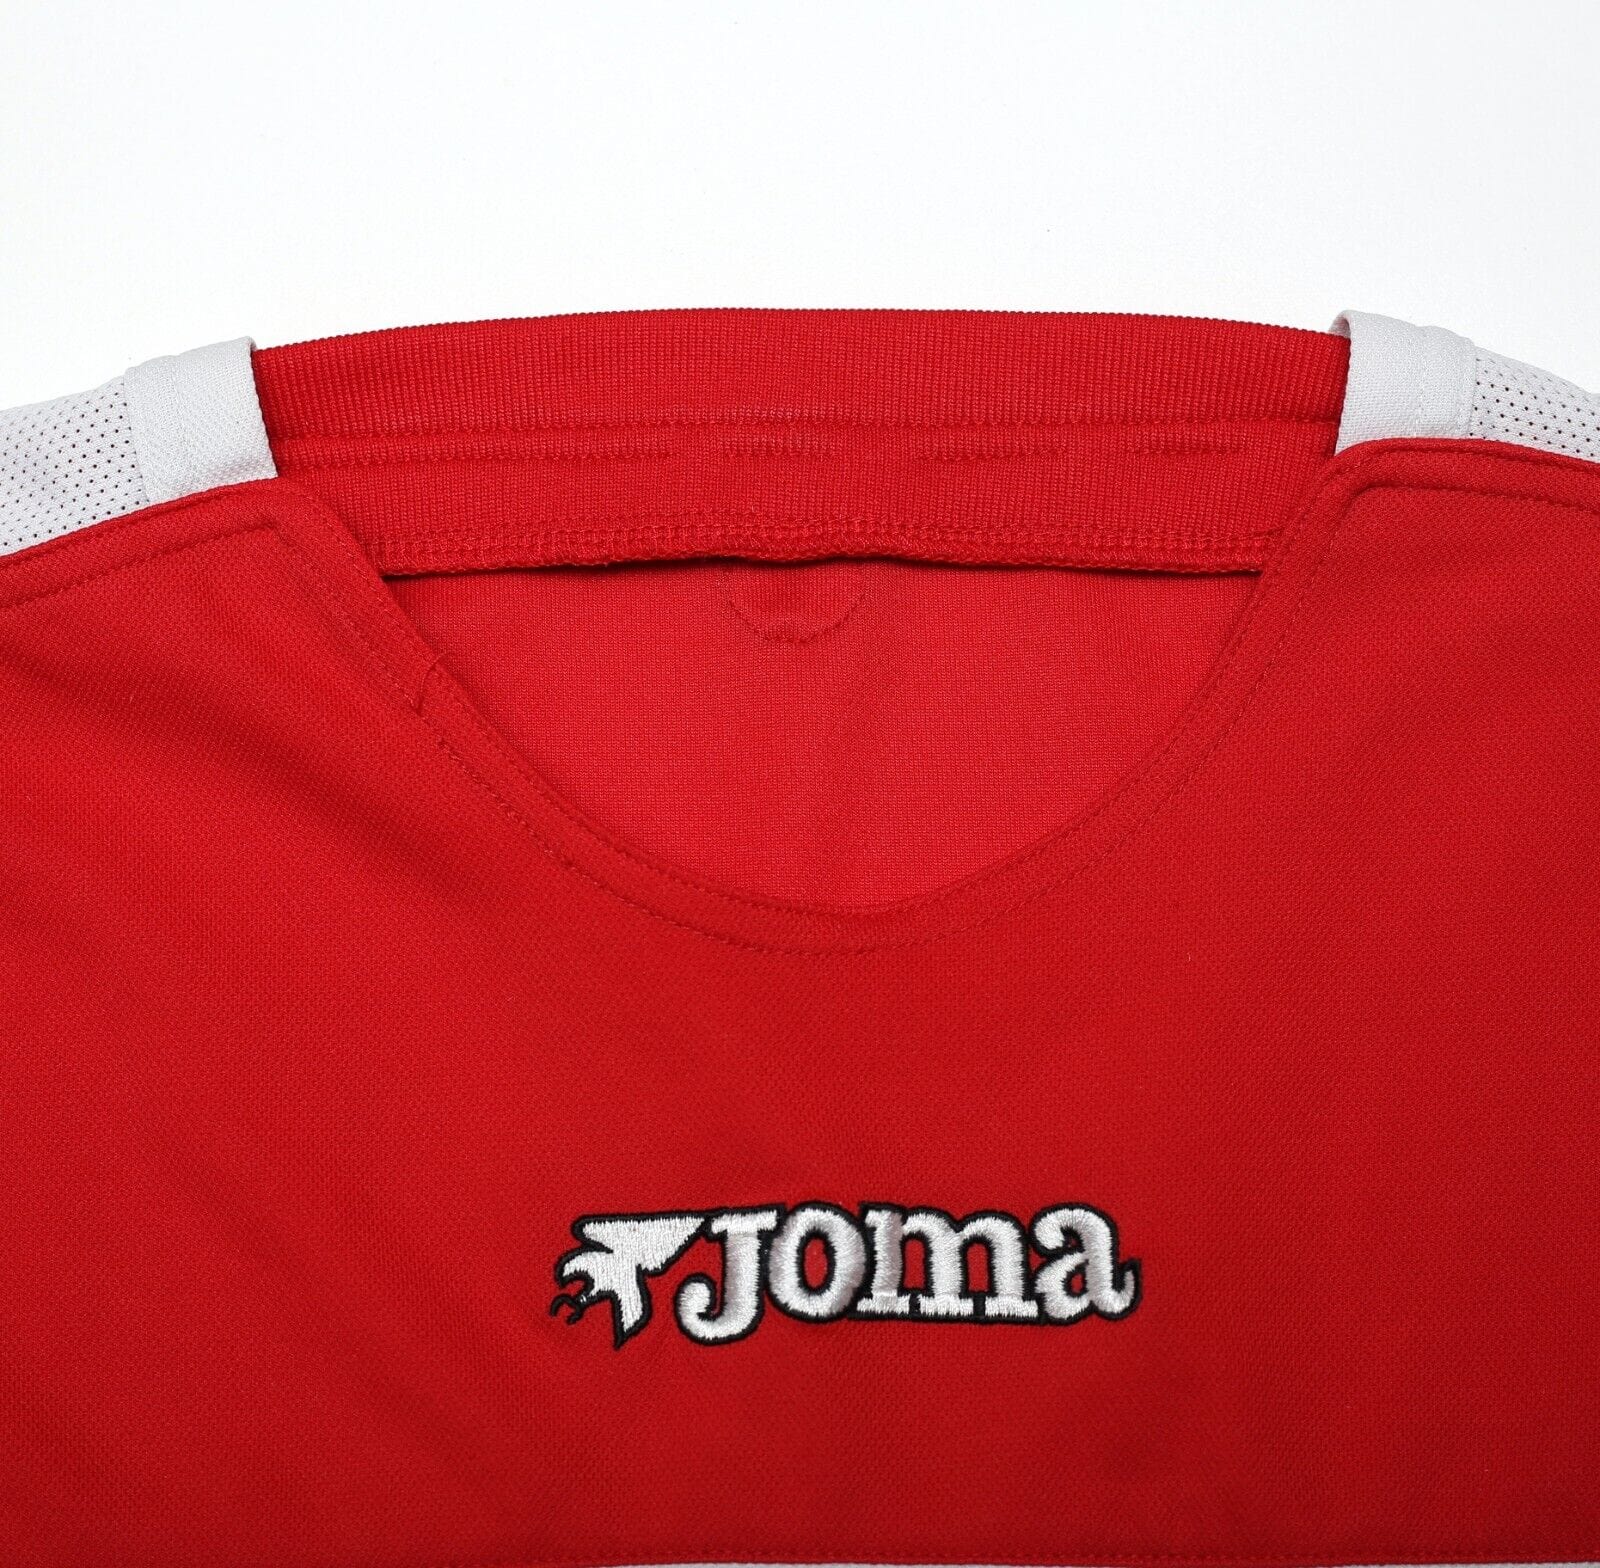 2003/04 DI CANIO #11 Charlton Atheltic Vintage Joma Home Football Shirt (L)